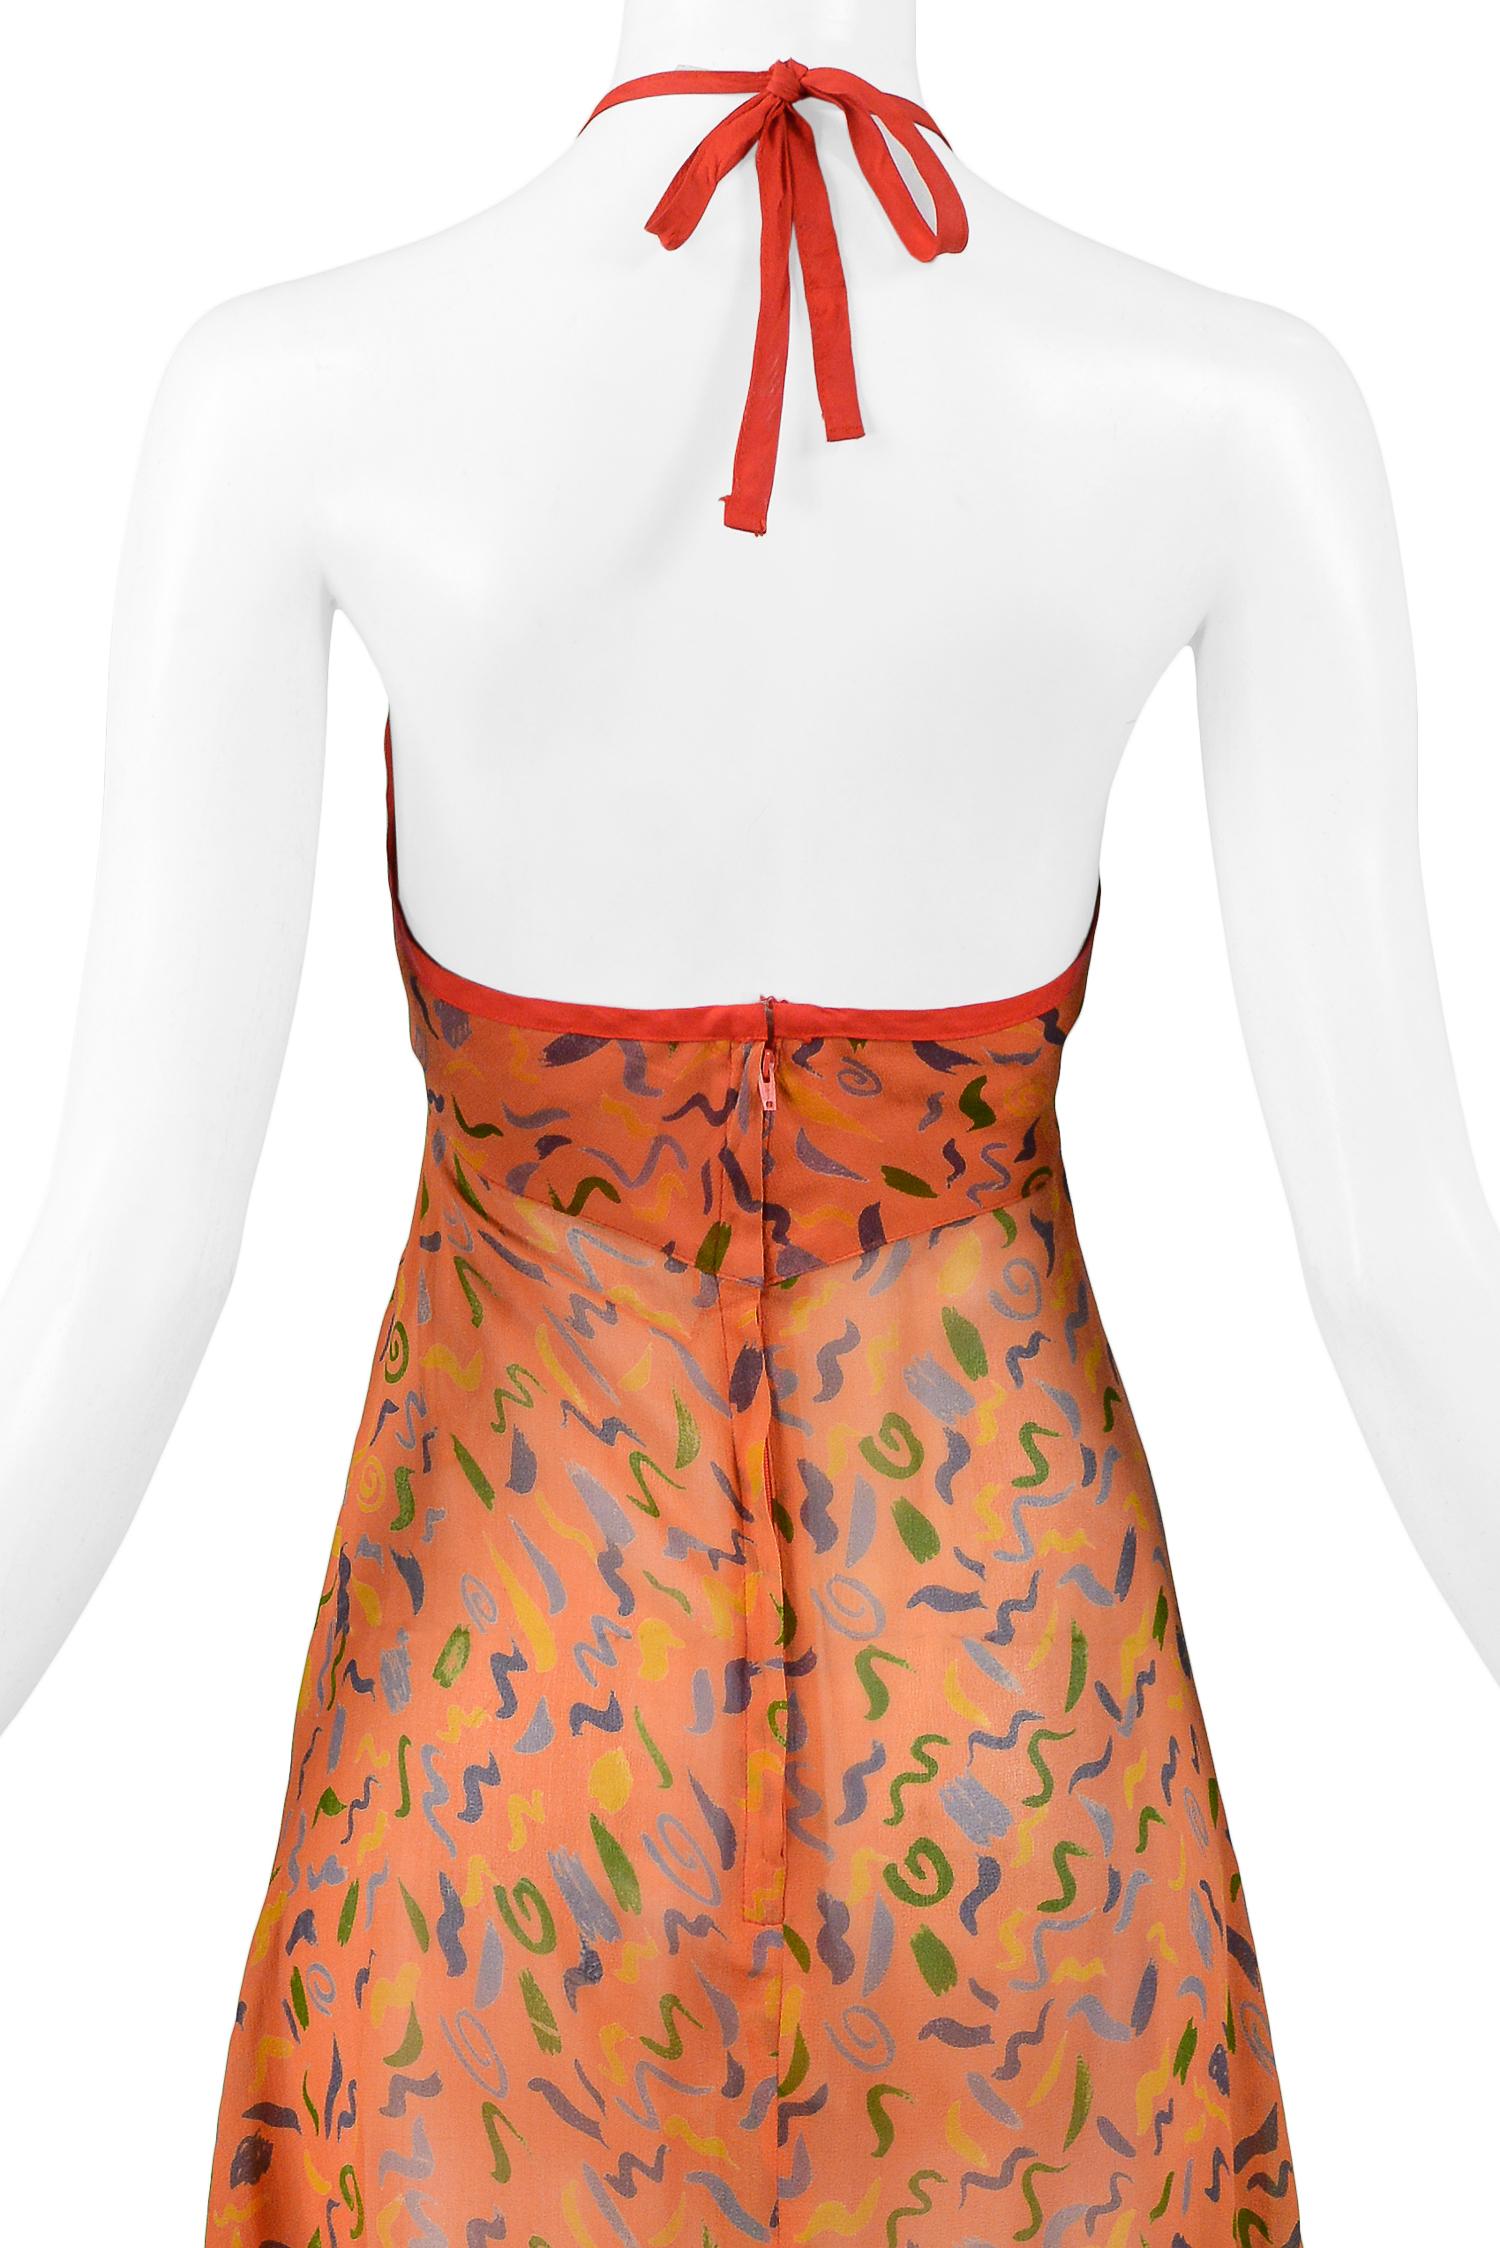 Women's Vintage Ossie Clark Orange Crepe Halter Dress with Celia Birtwell Print